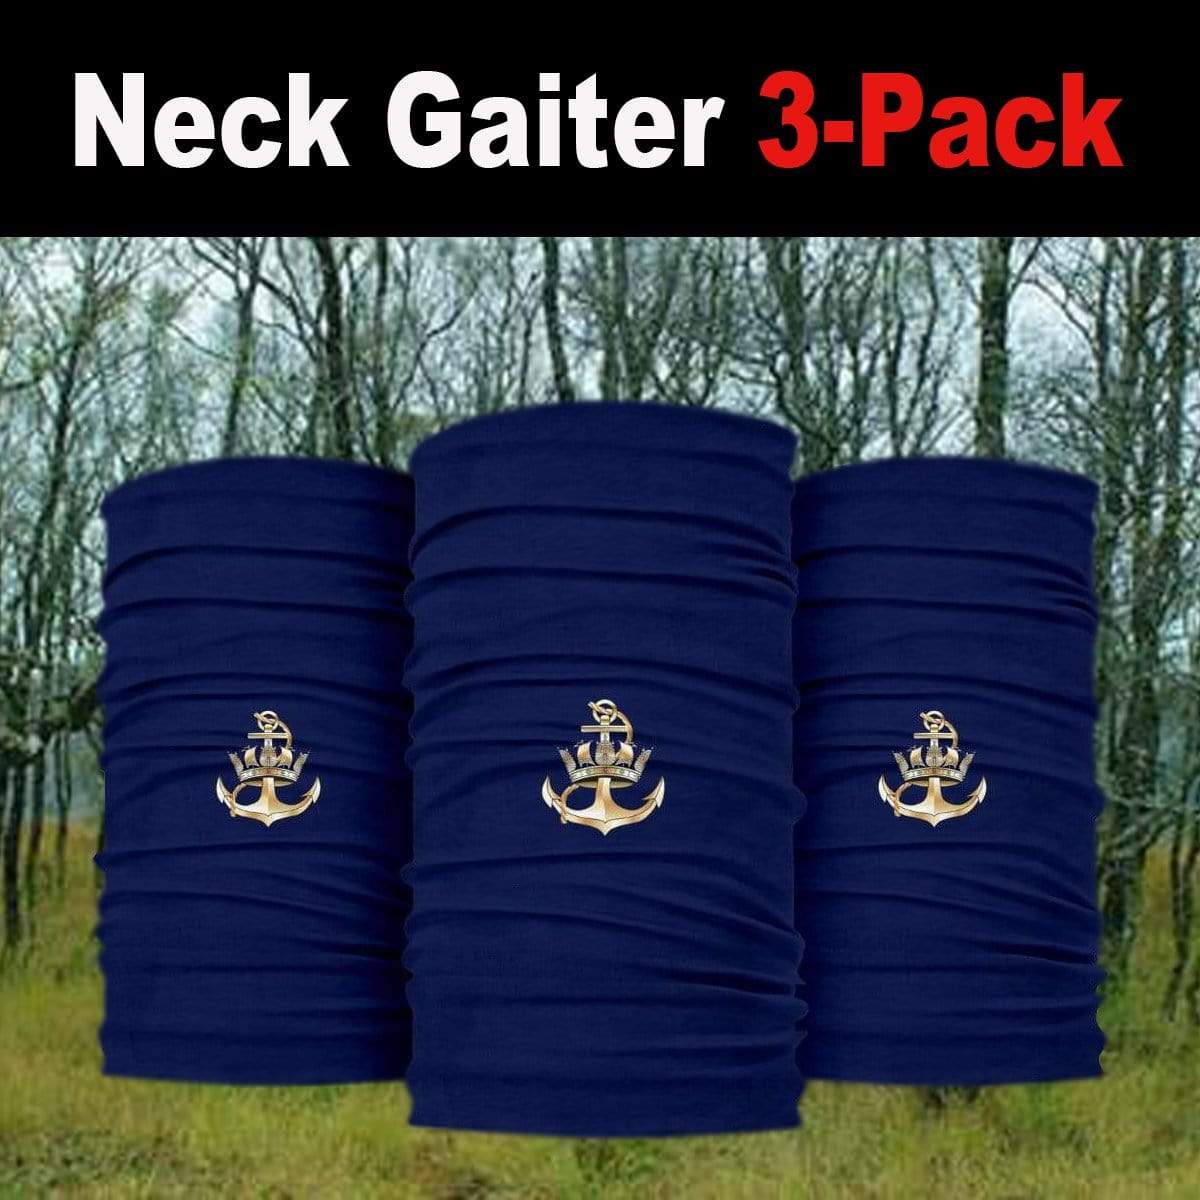 neck gaiter Bandana 3-Pack - Royal Navy Neck Gaiter 3-Pack Royal Navy Neck Gaiter/Headover 3-Pack